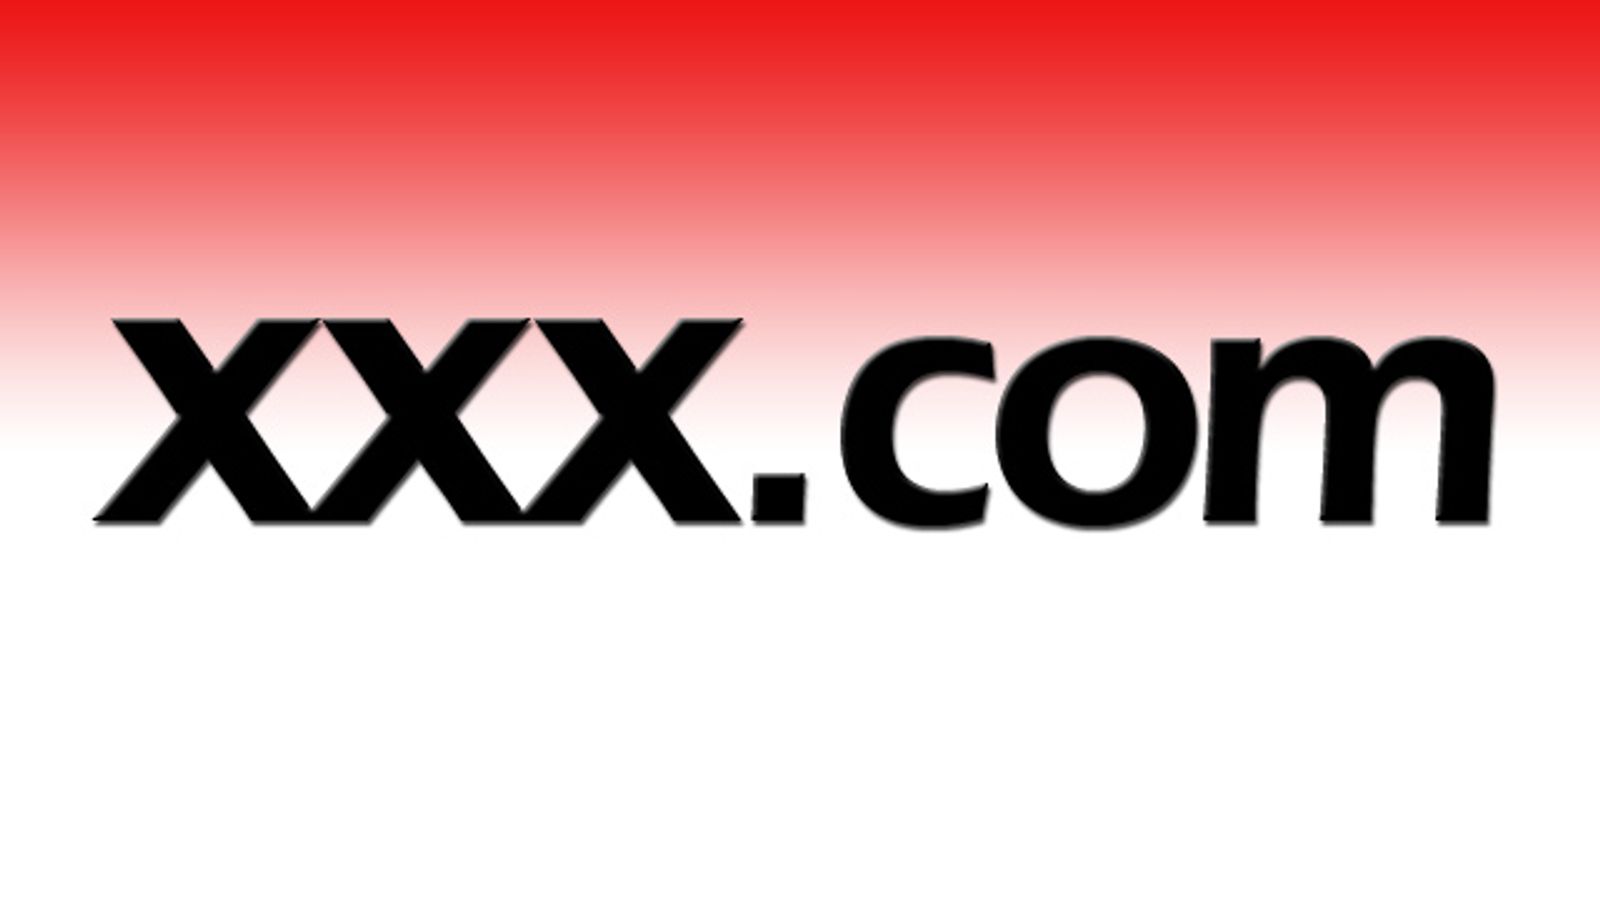 XXX.com Up For Auction August 18